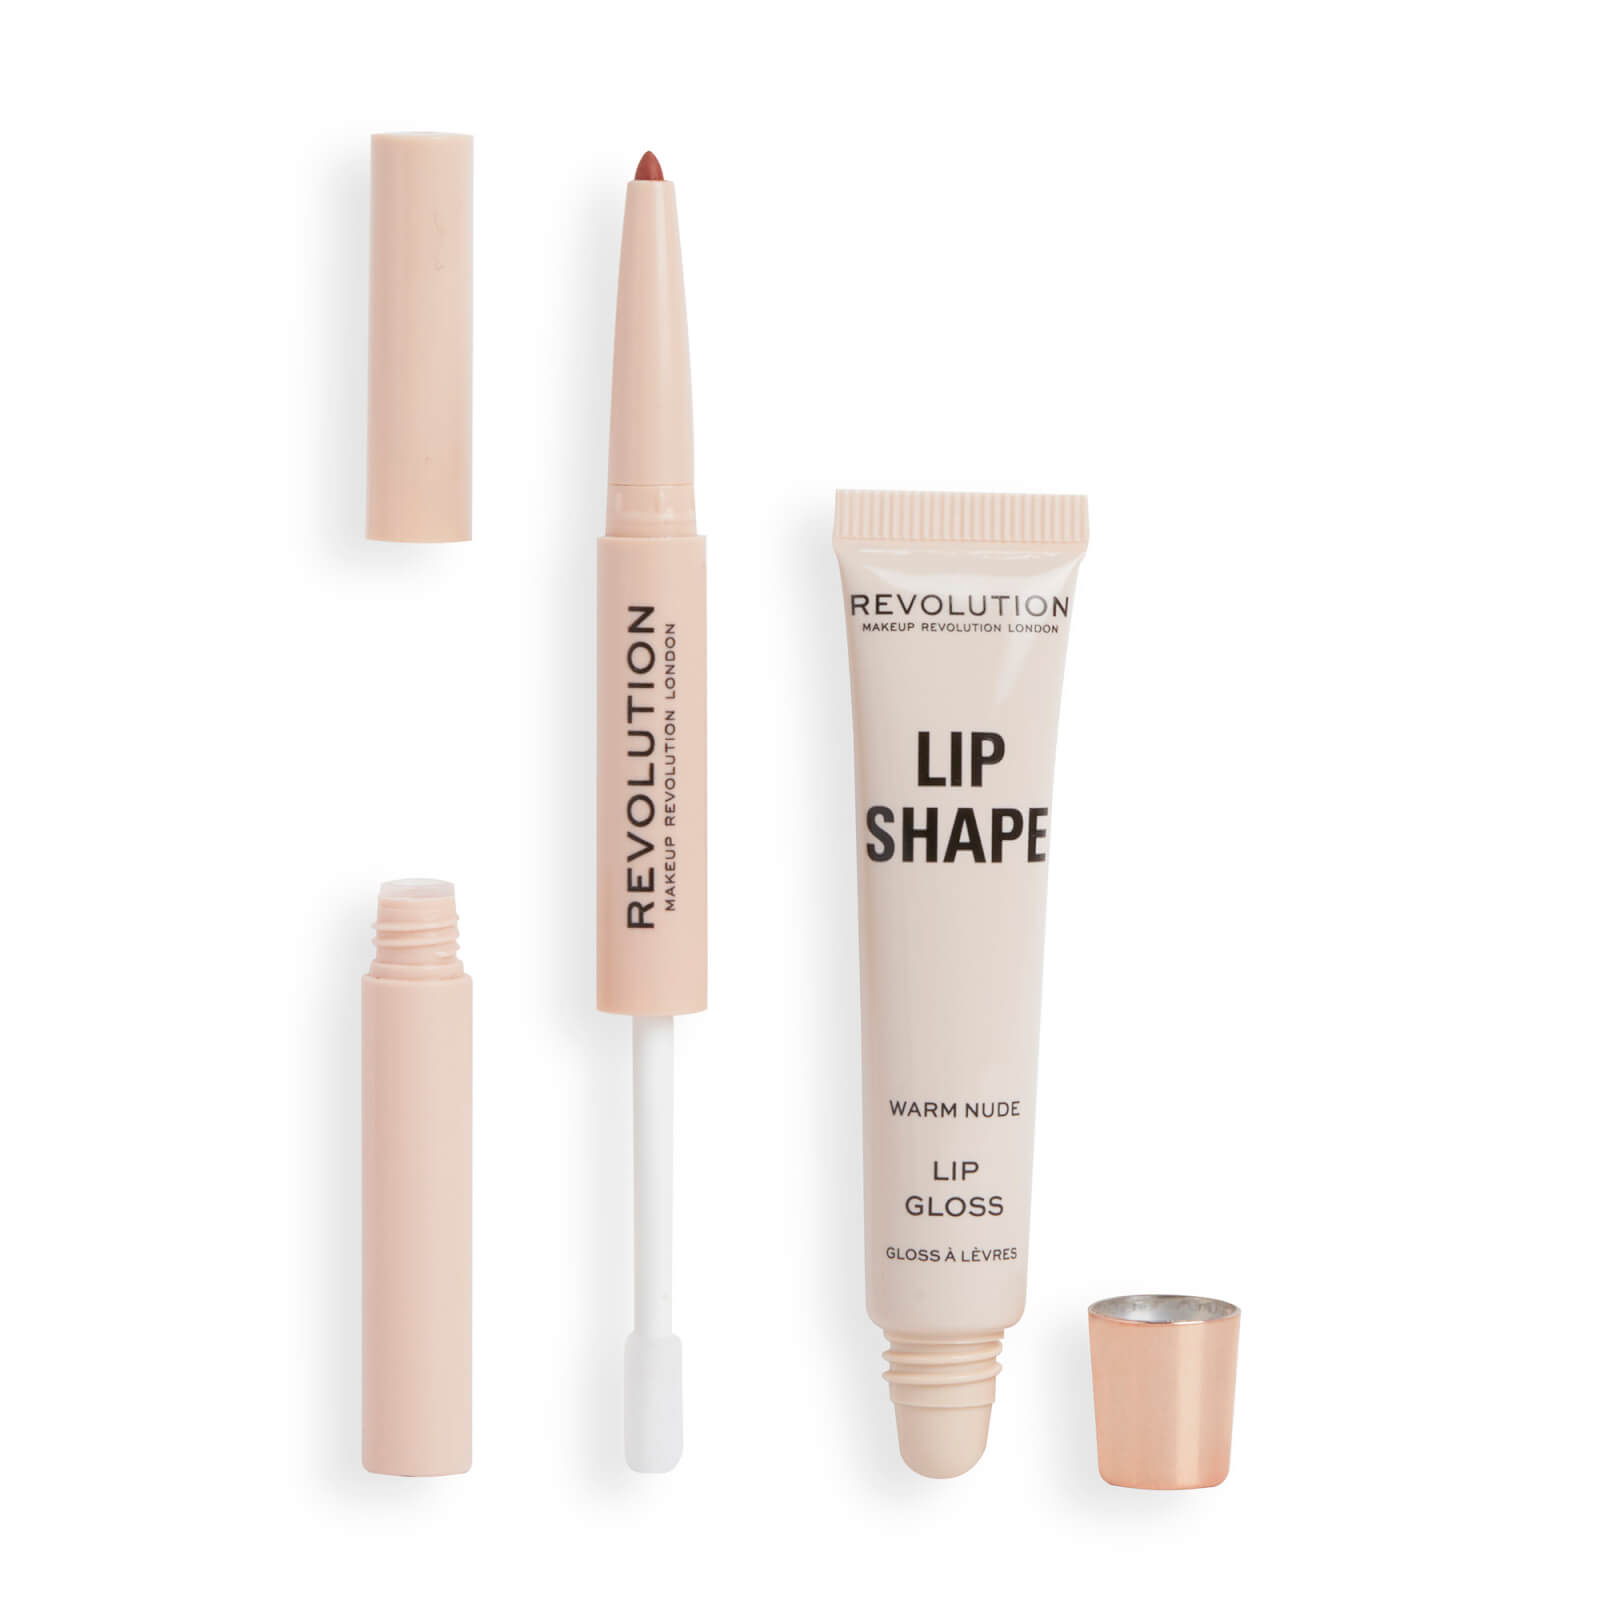 Revolution Beauty Lip Shape Kit - Warm Nude